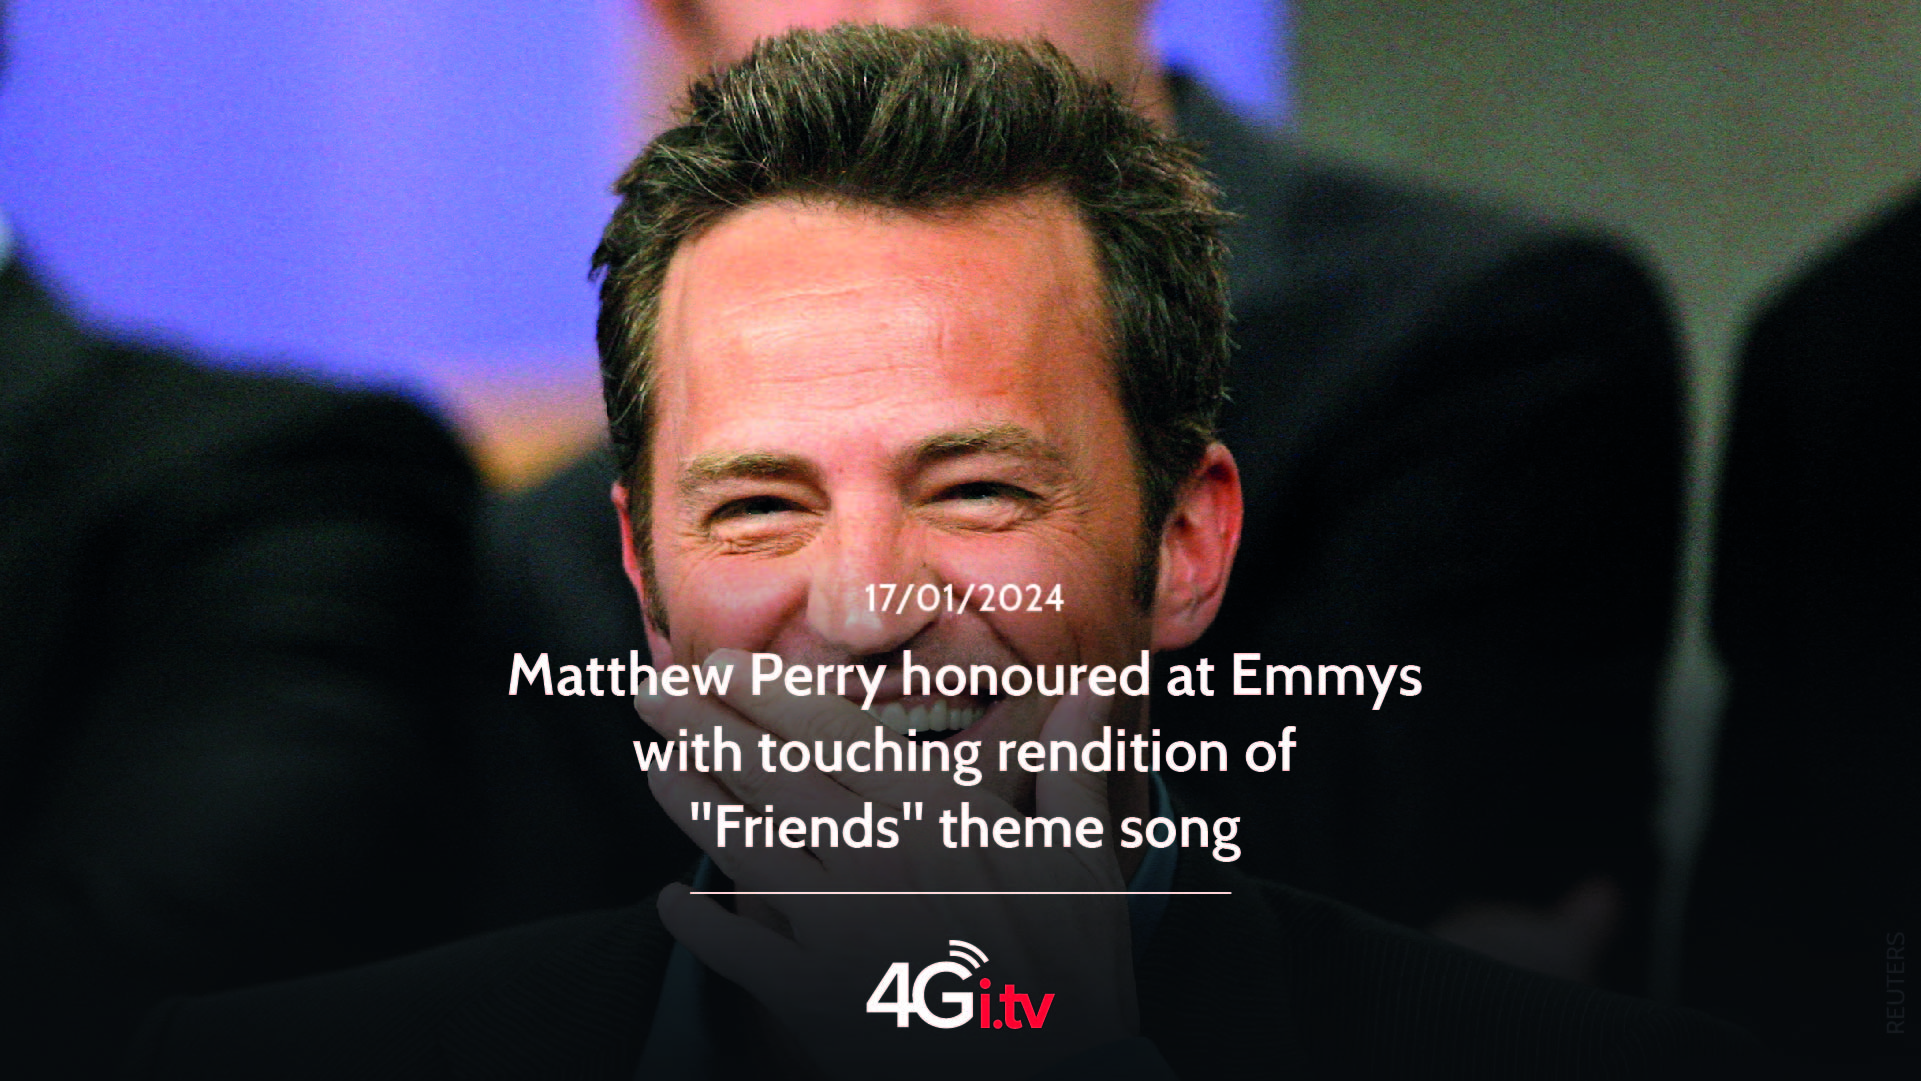 Lesen Sie mehr über den Artikel Matthew Perry honoured at Emmys with touching rendition of “Friends” theme song